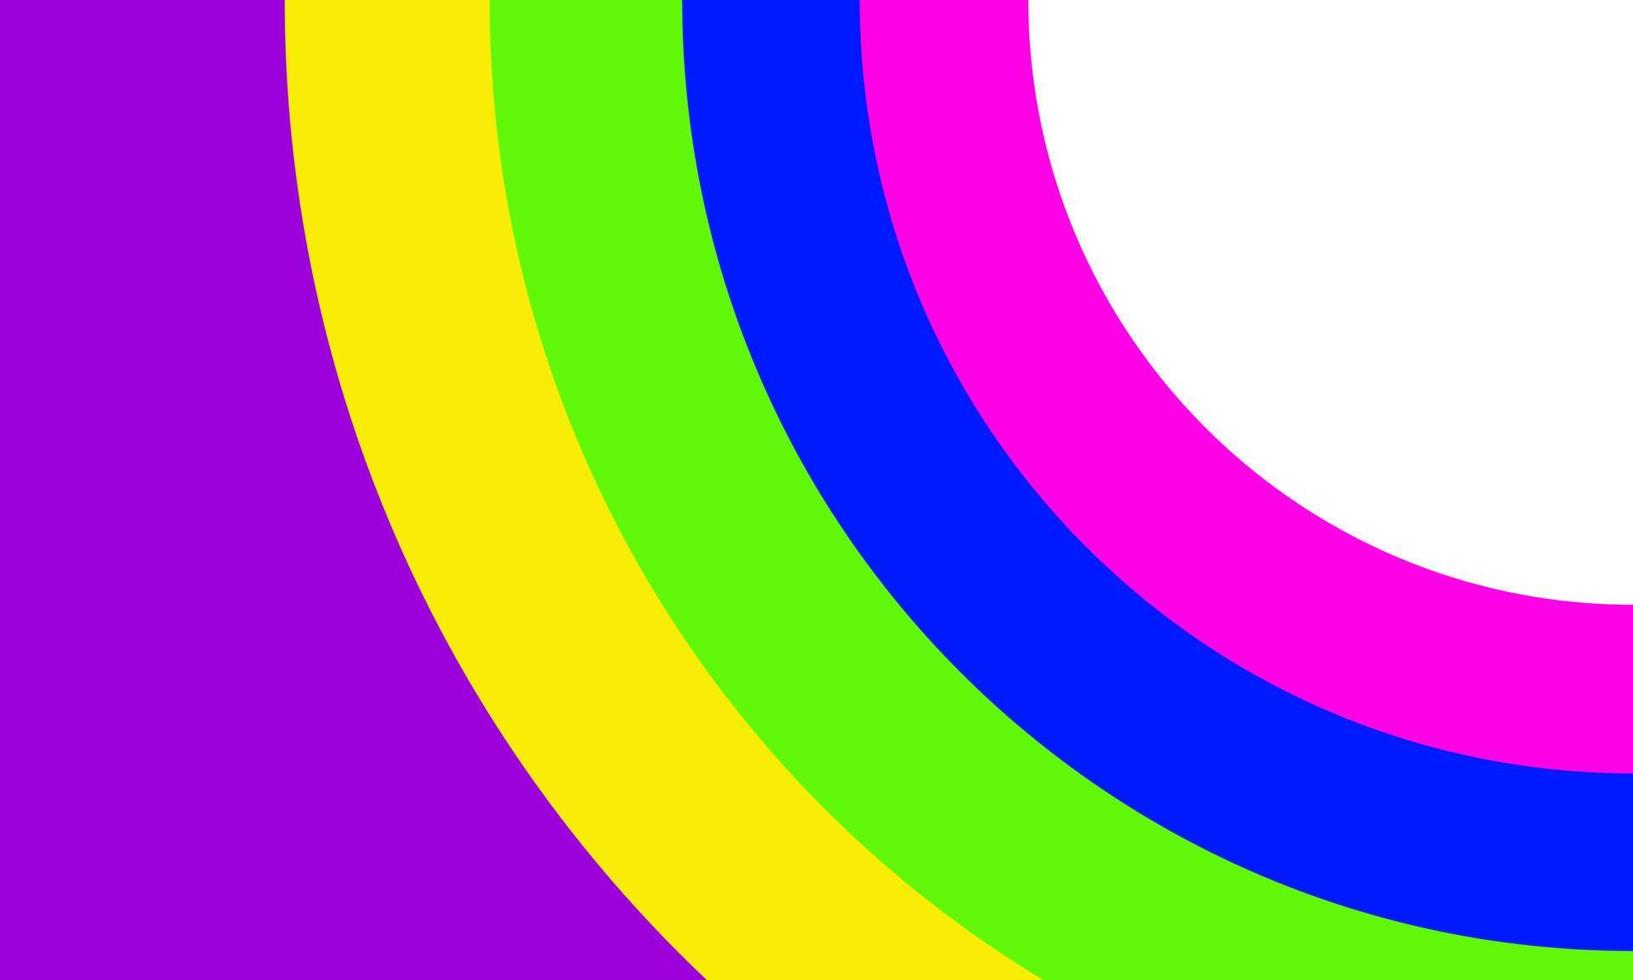 fondos coloridos como el arco iris. eps 10 vector